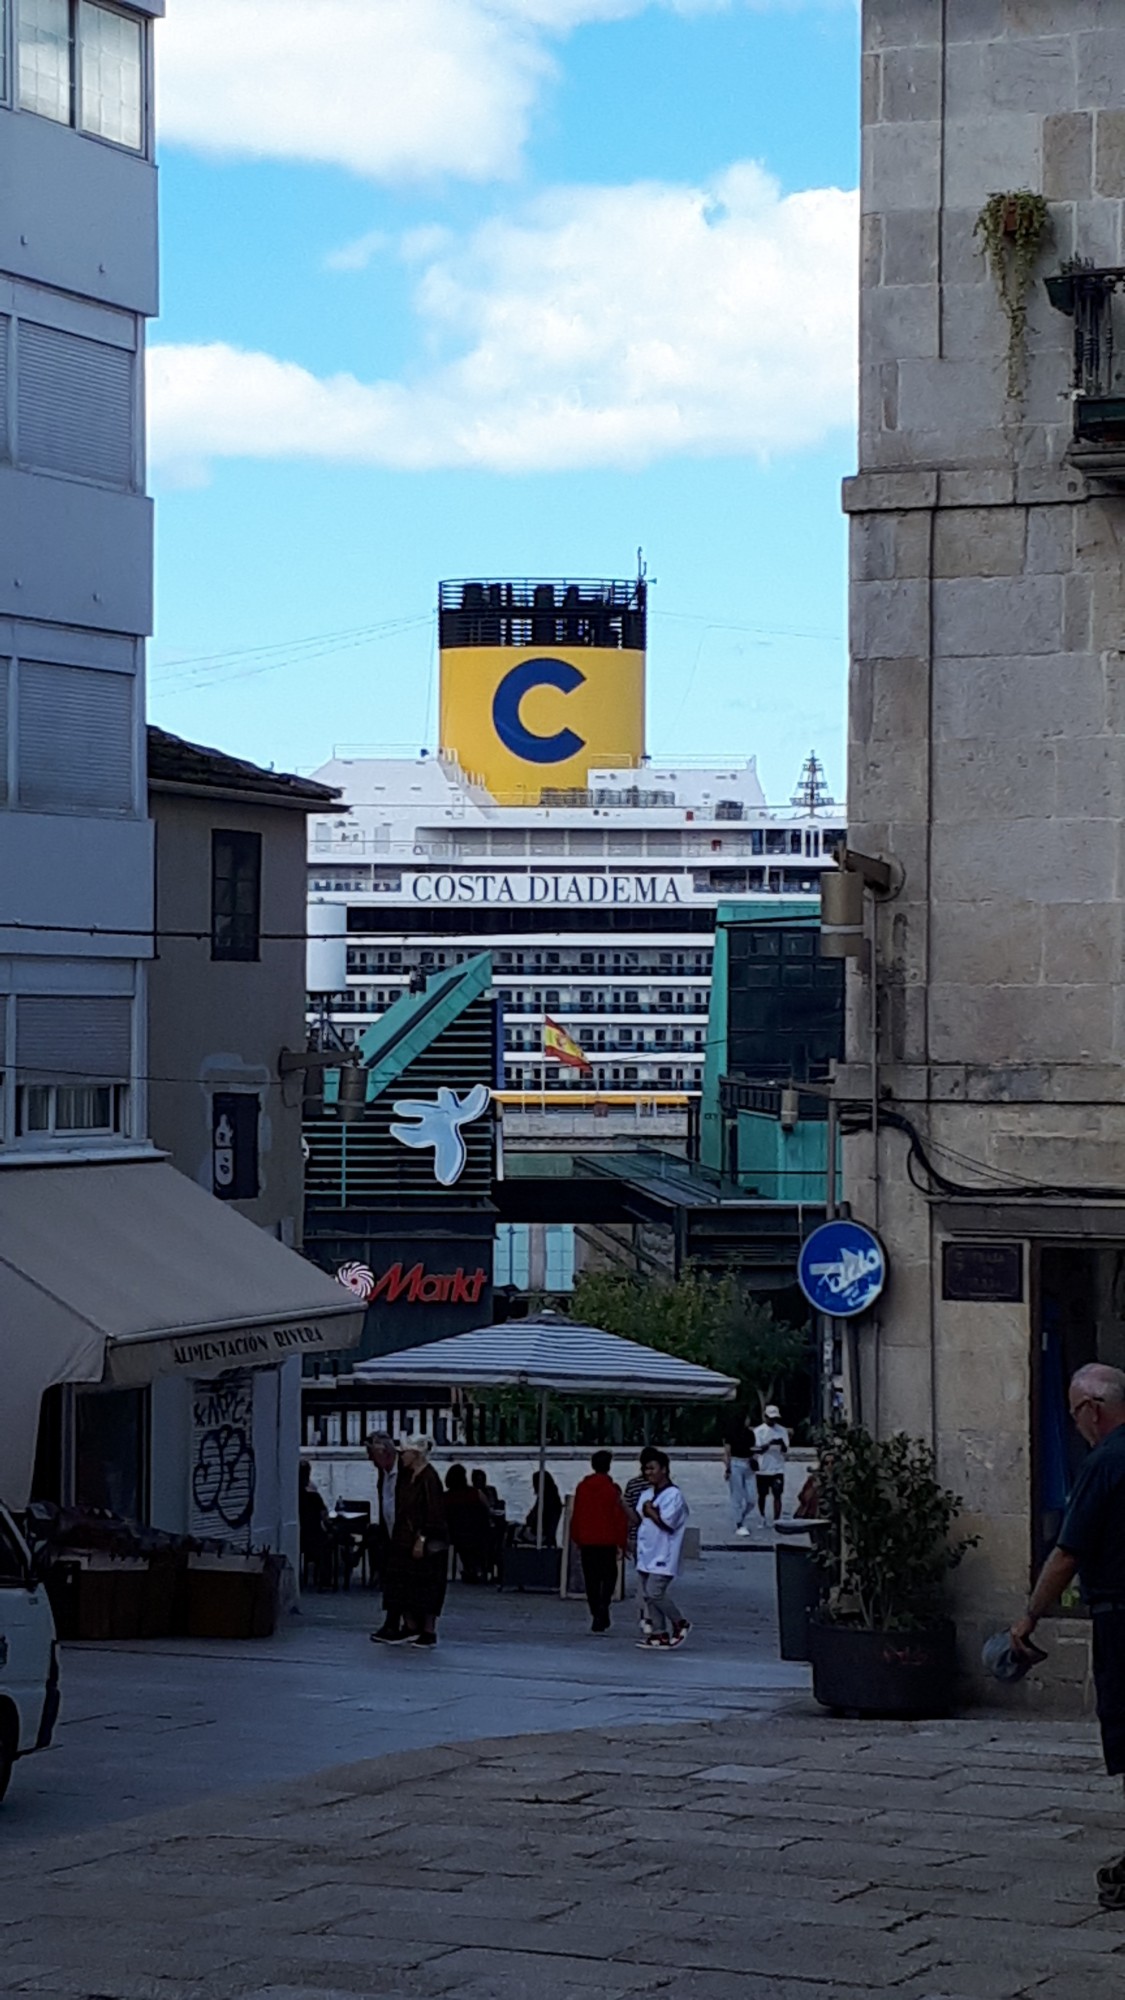 Foto: El Barco se asoma a las calles de Vigo - Vigo (Pontevedra), España